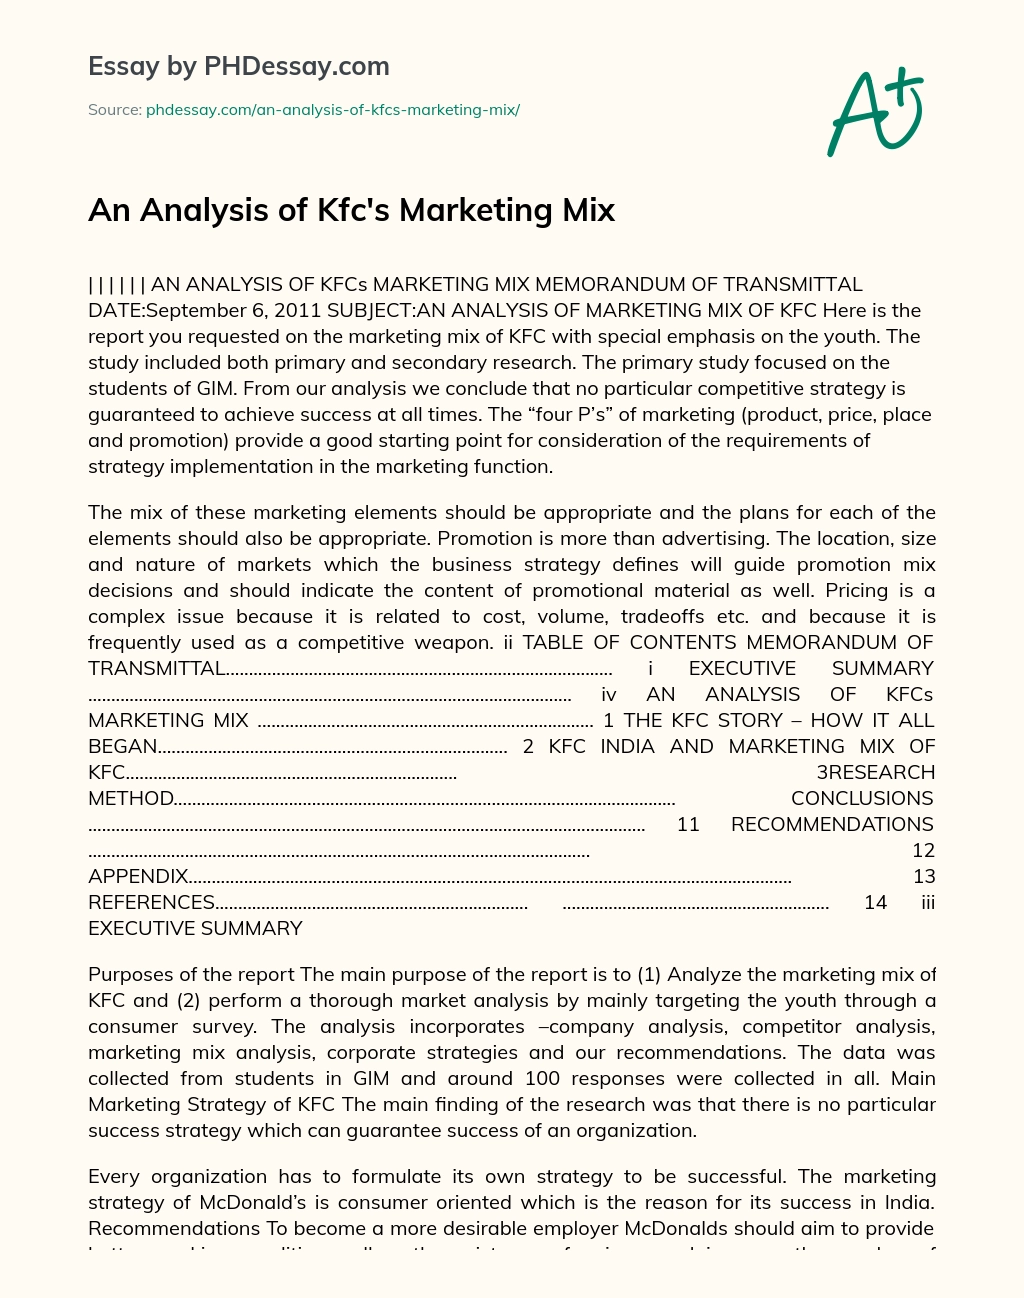 An Analysis of Kfc’s Marketing Mix essay